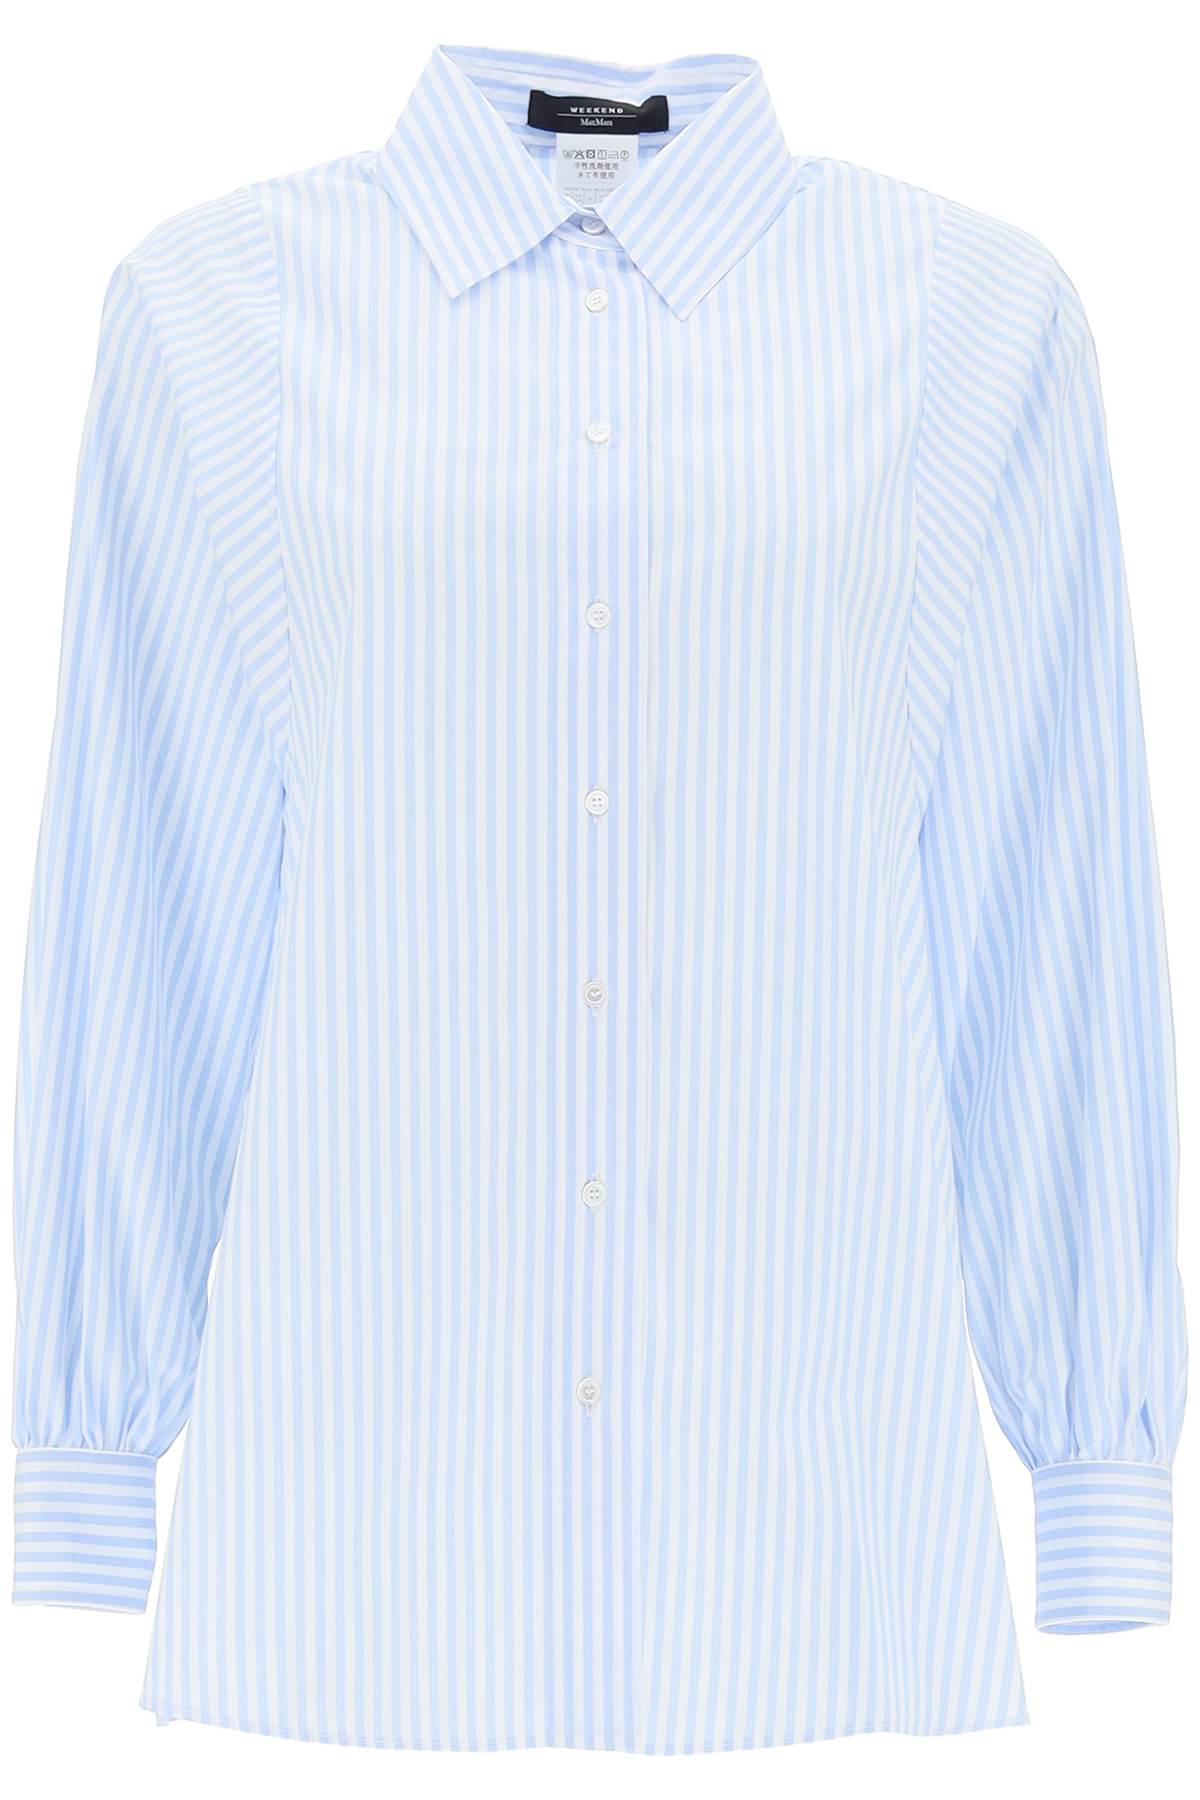 Weekend Max Mara Fufy Striped Shirt In White,light Blue